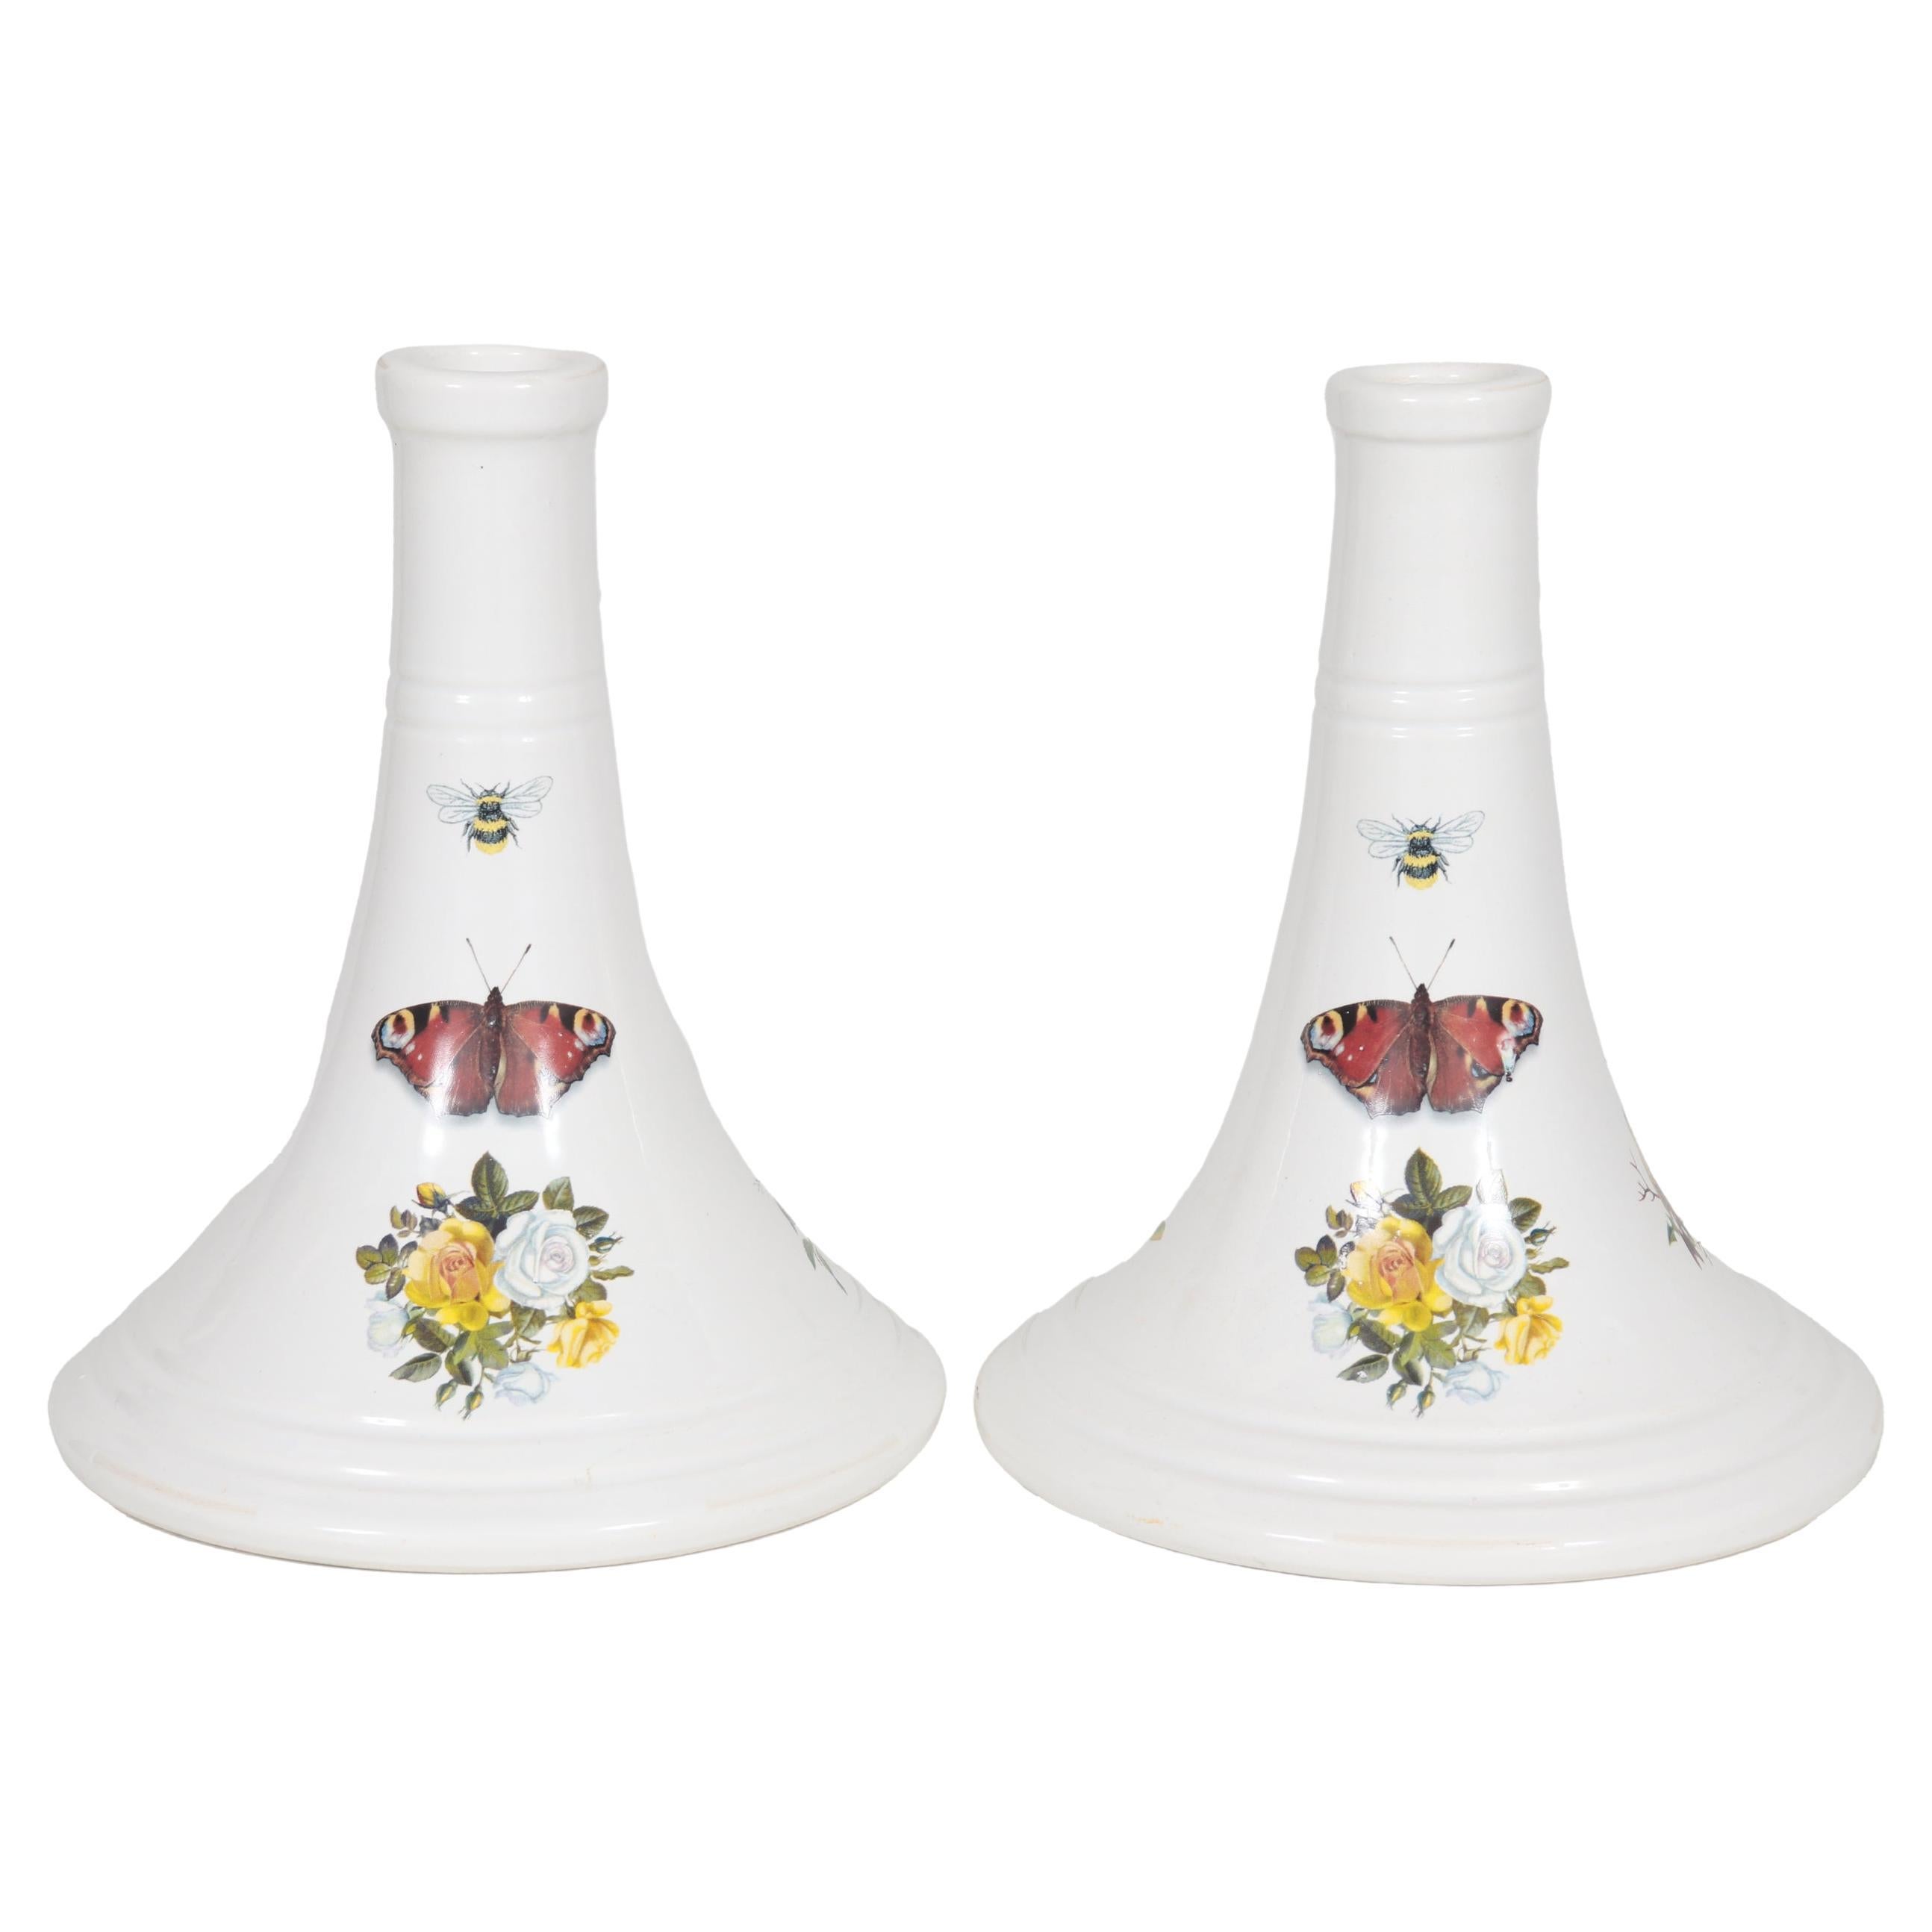 Italian Ceramic Candlestick Holders For Sale